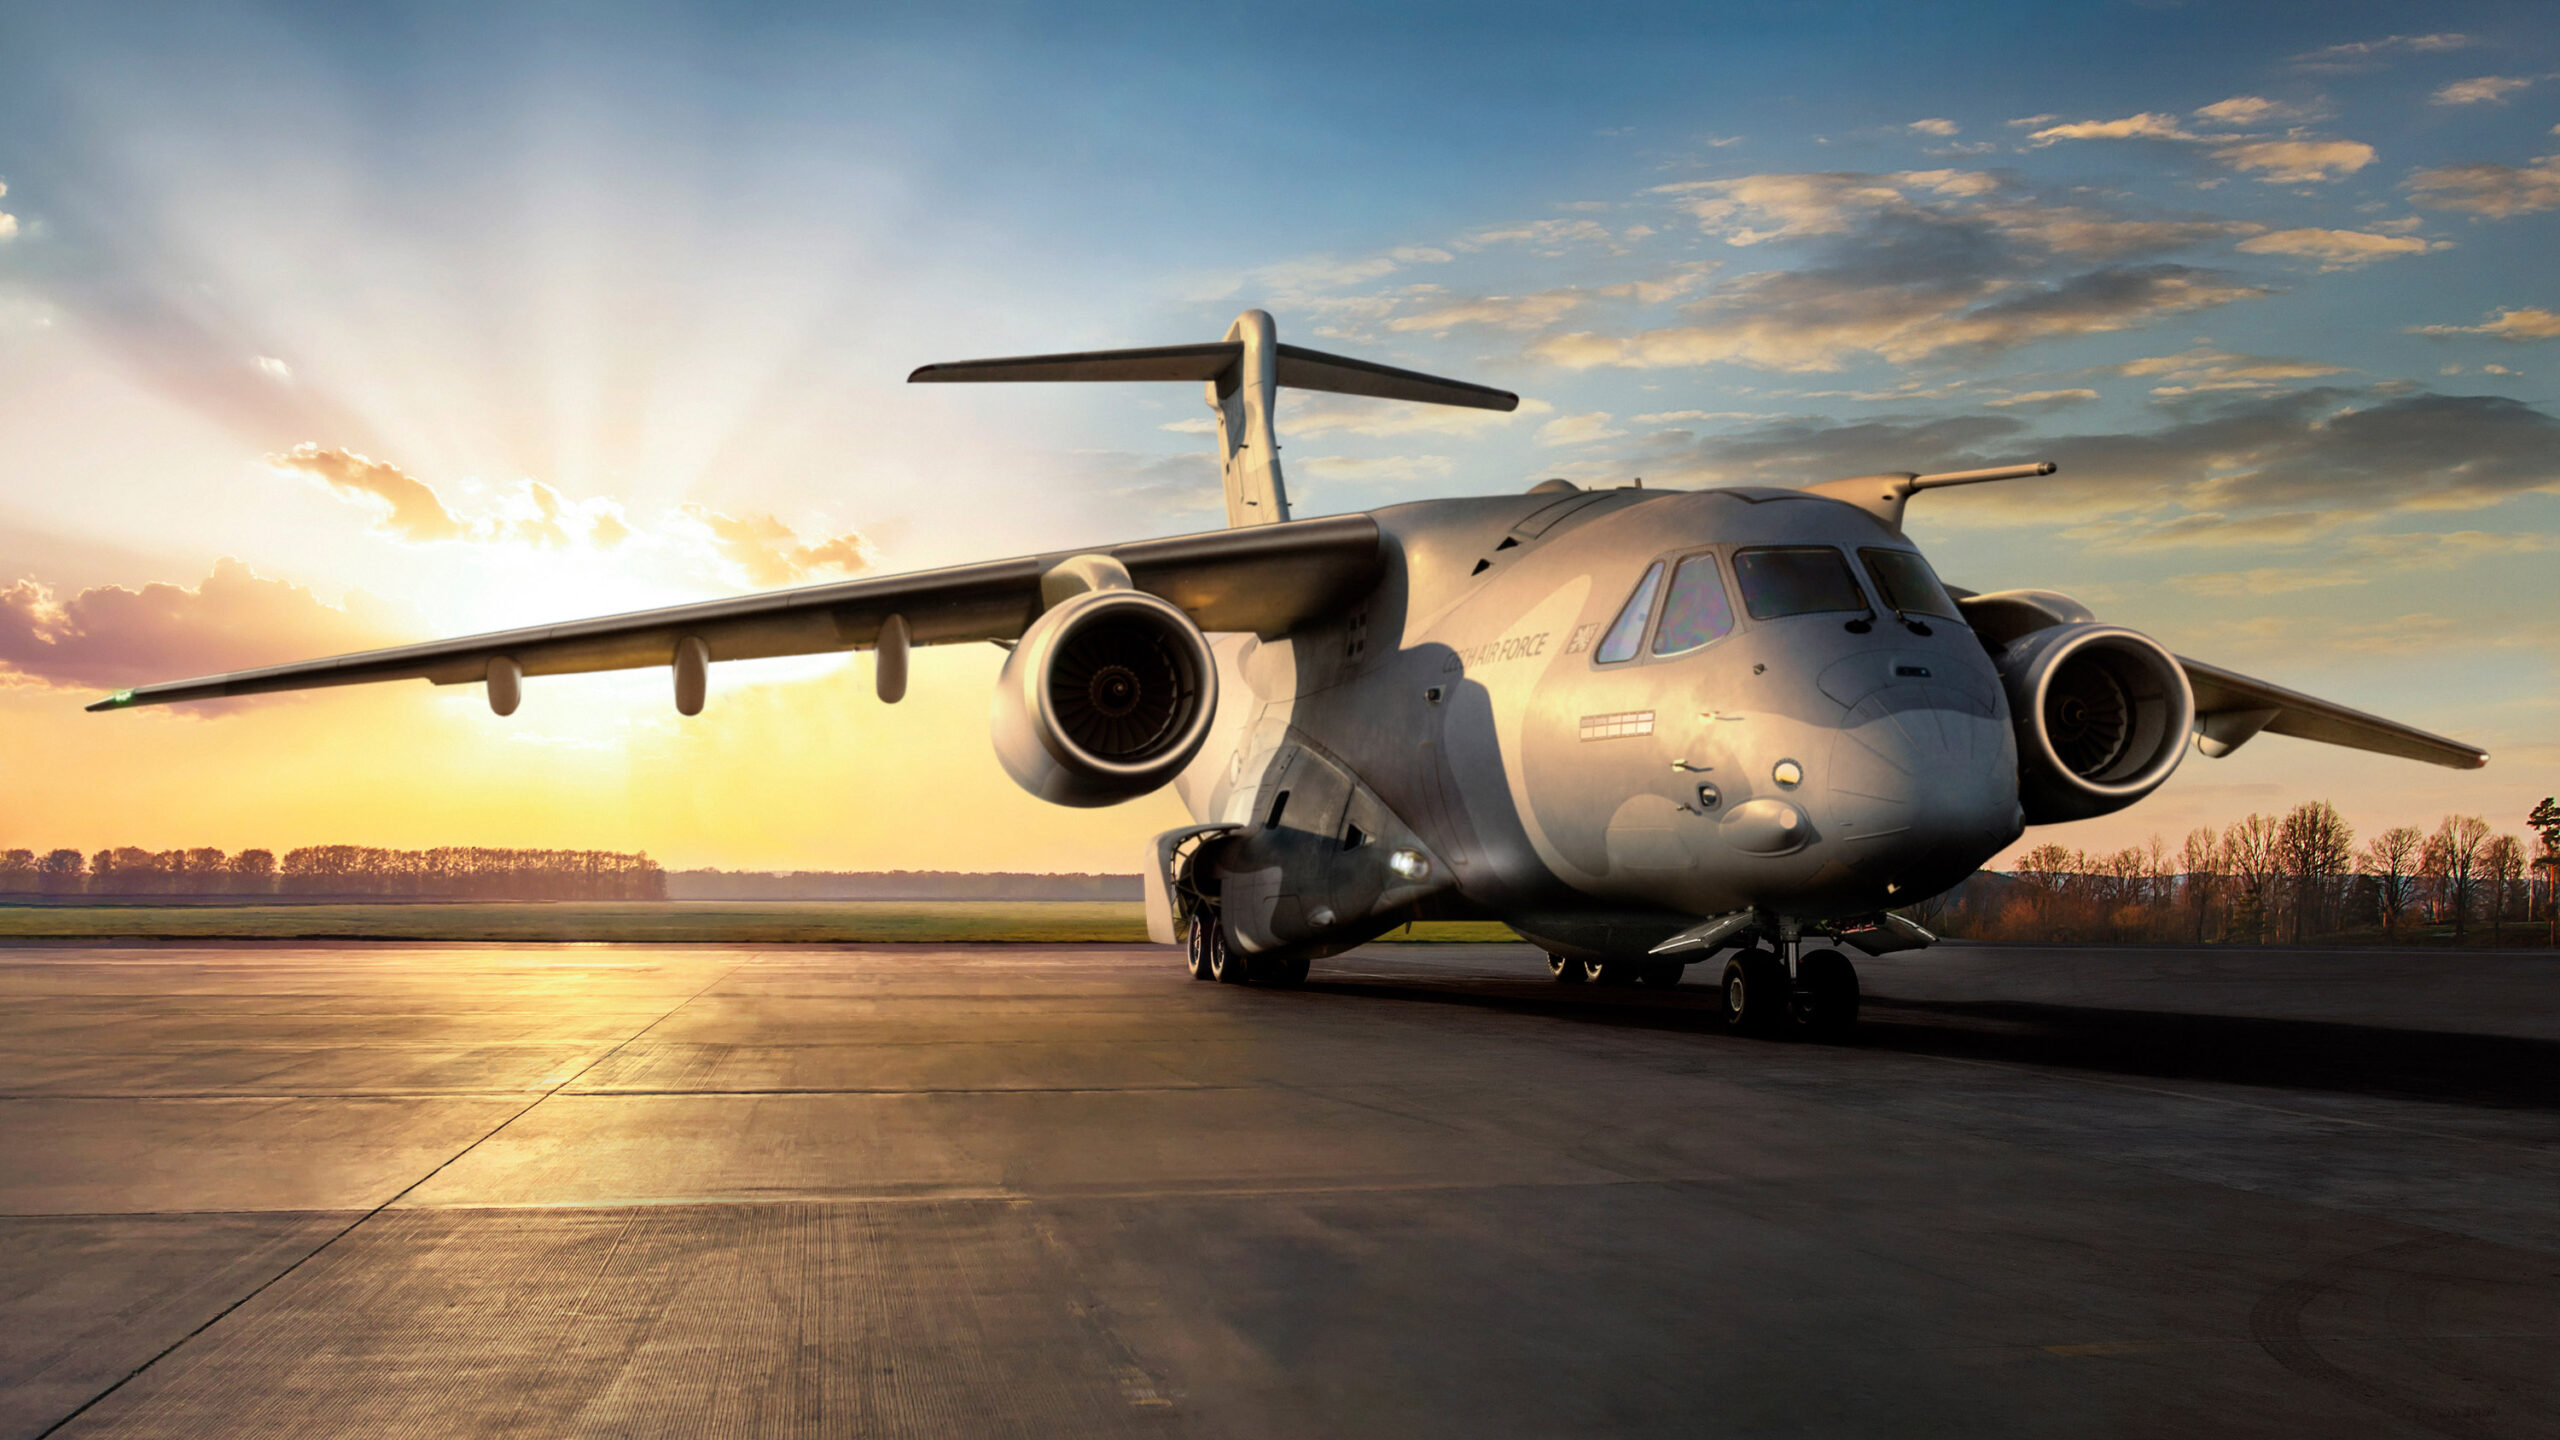 The C-390 Millennium tactical transport aircraft. Photo: Embraer